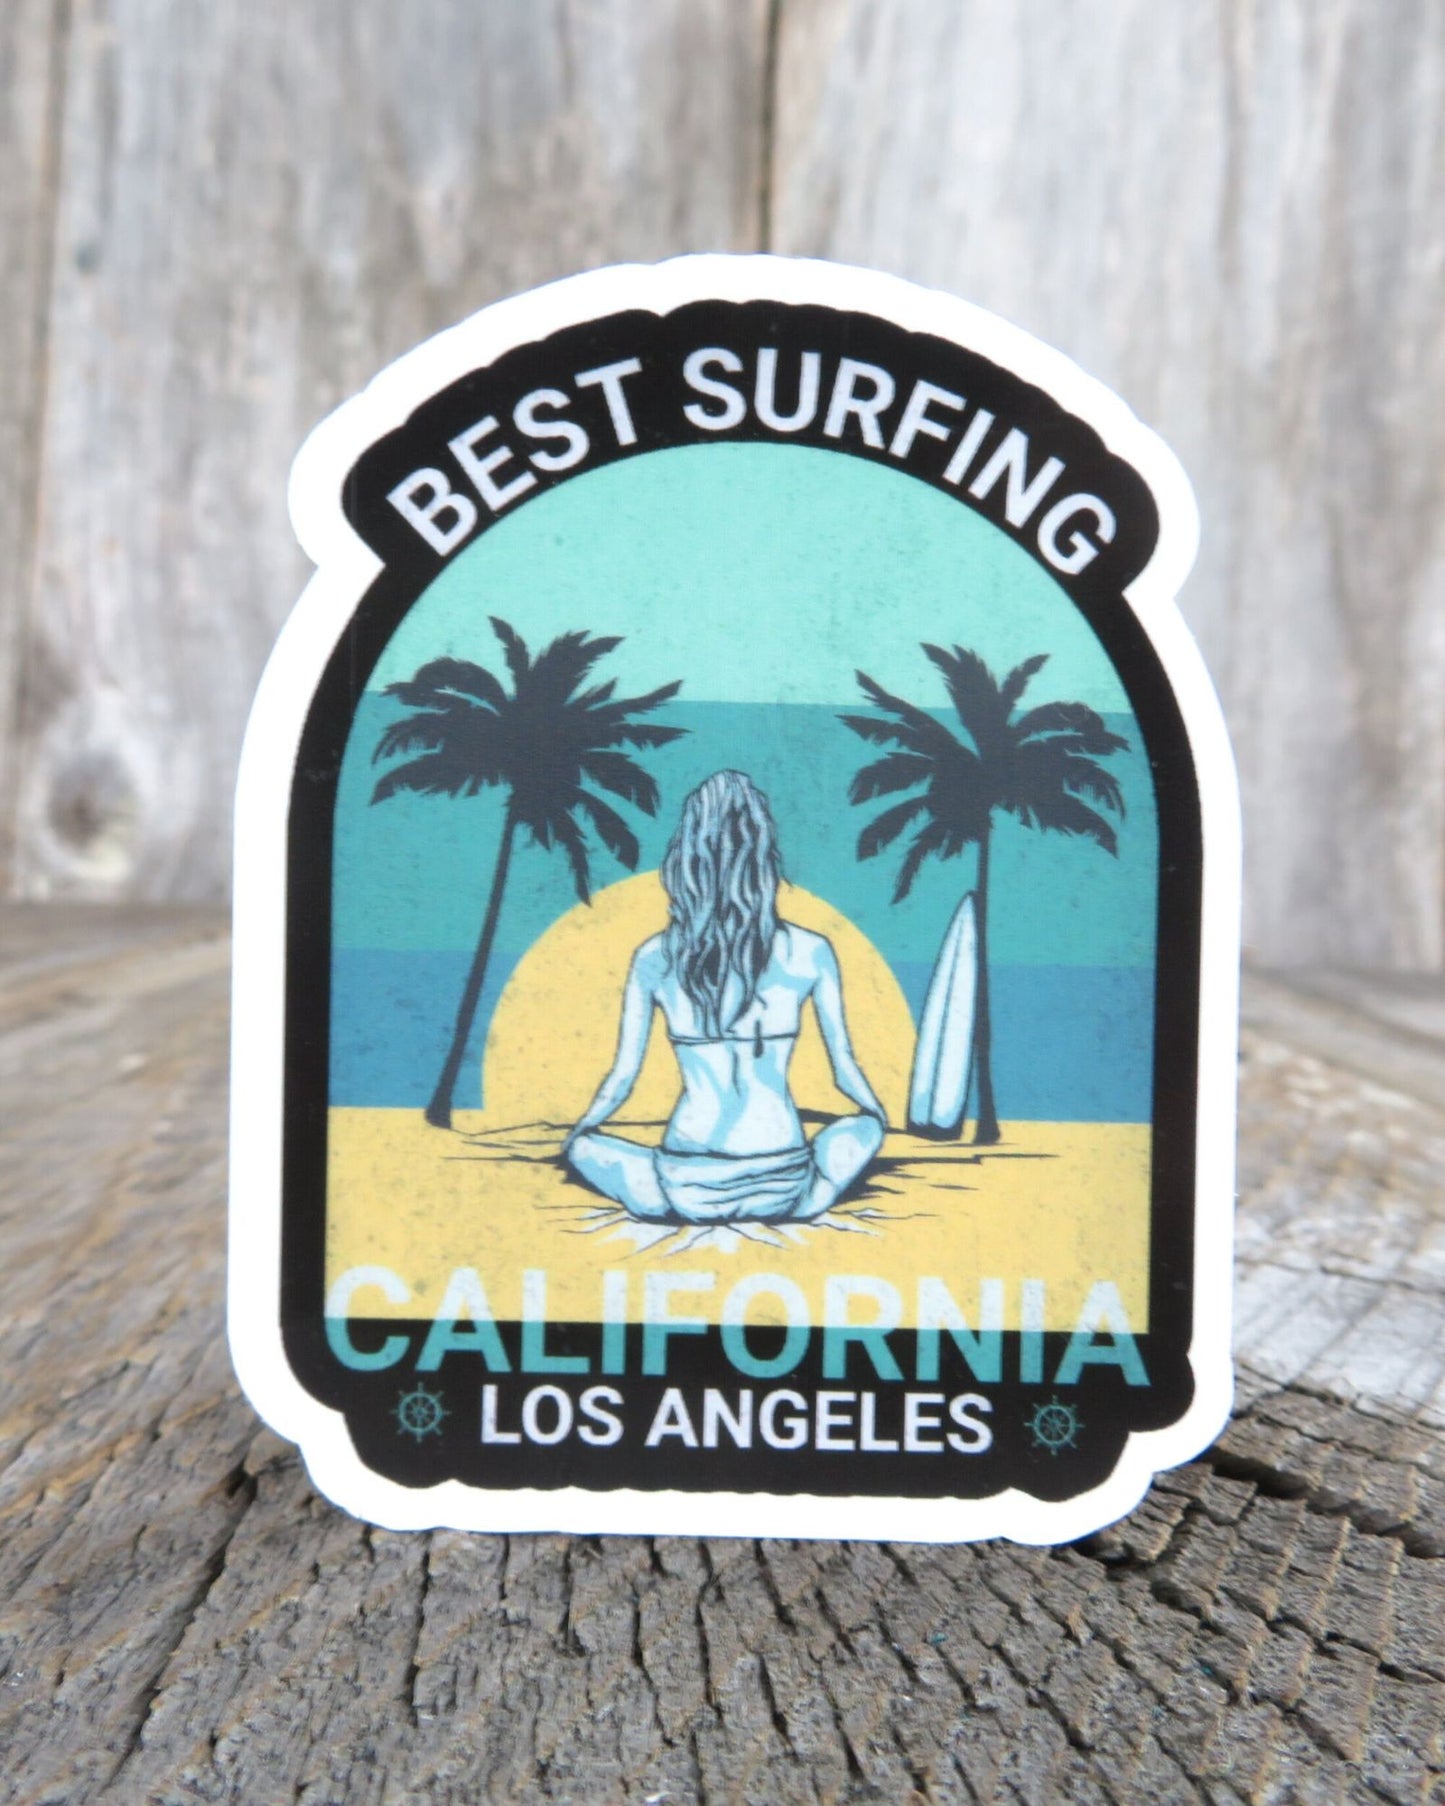 Best Surfing Los Angeles Sticker California Summer Lovers Surfers Palm Trees Waterproof Travel Souvenir Water Bottle Laptop